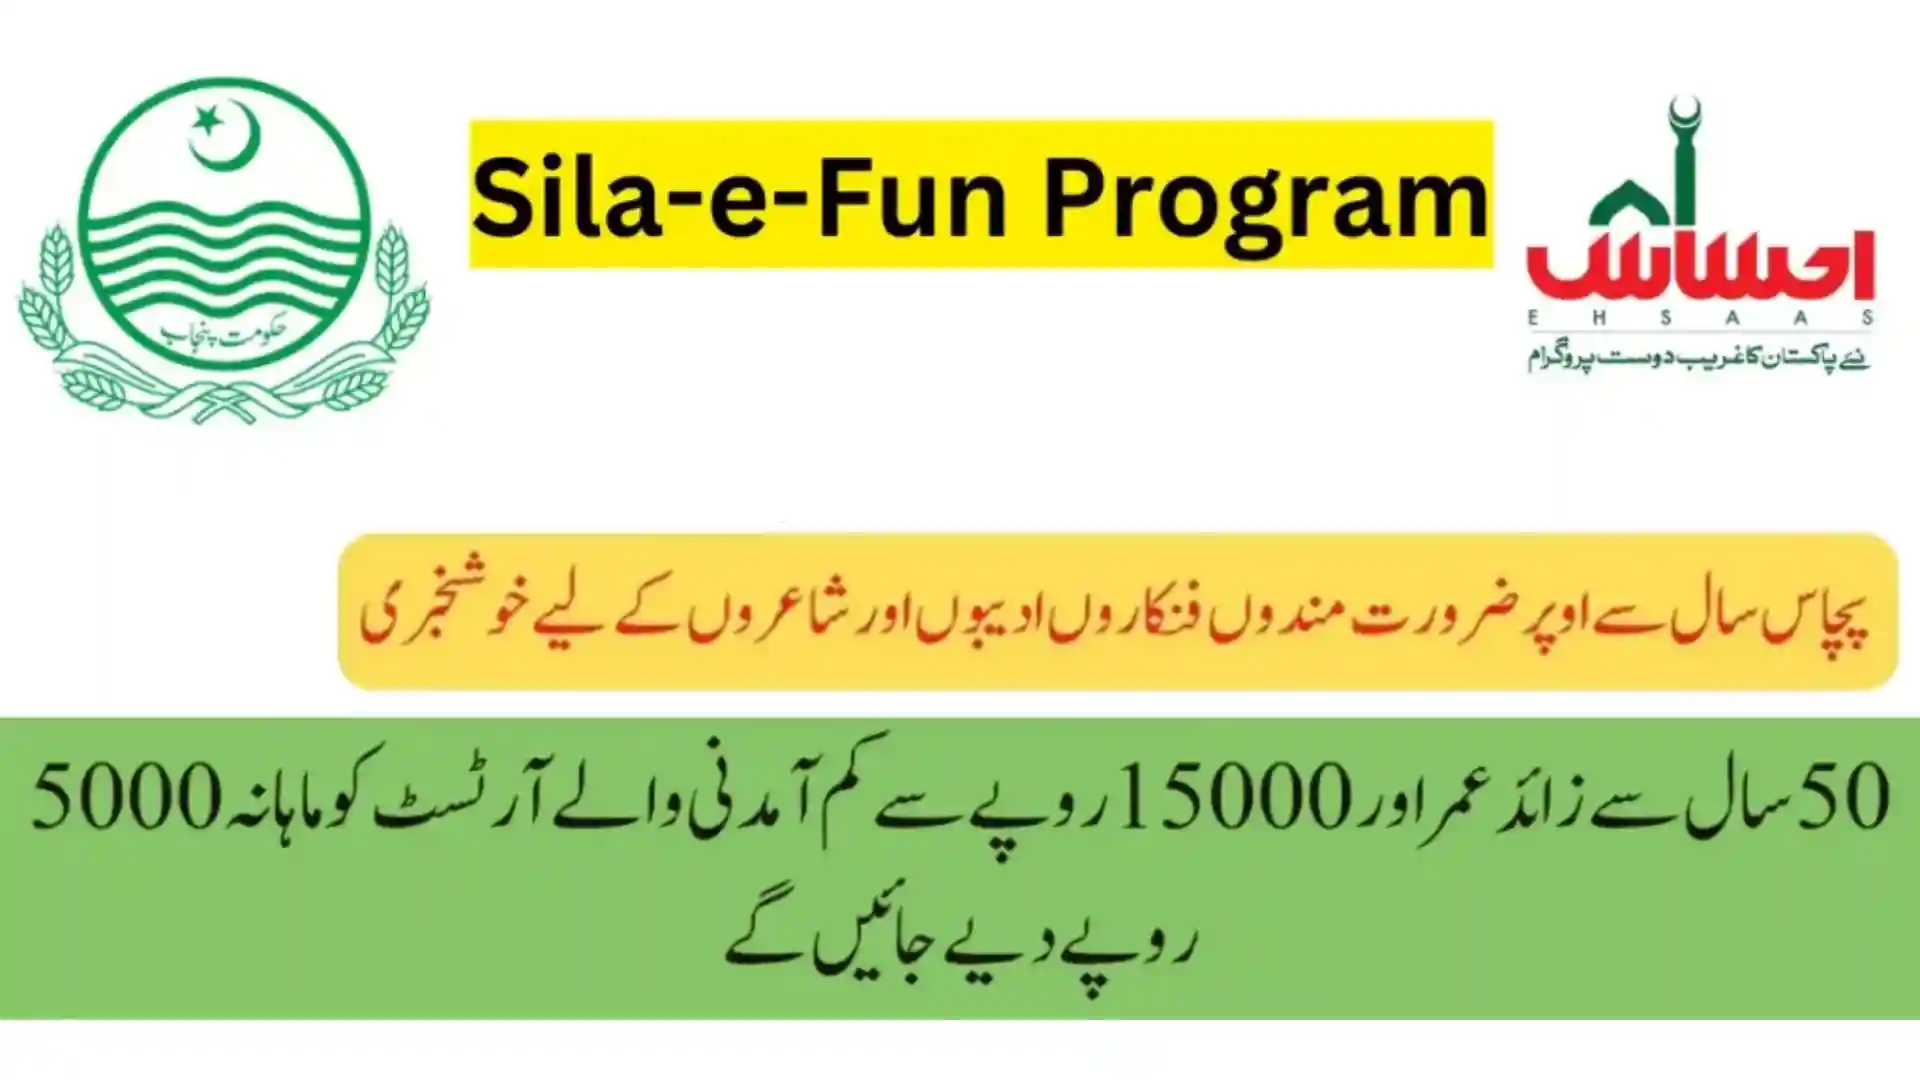 Aim of Ehsaas Sila-e-fun program